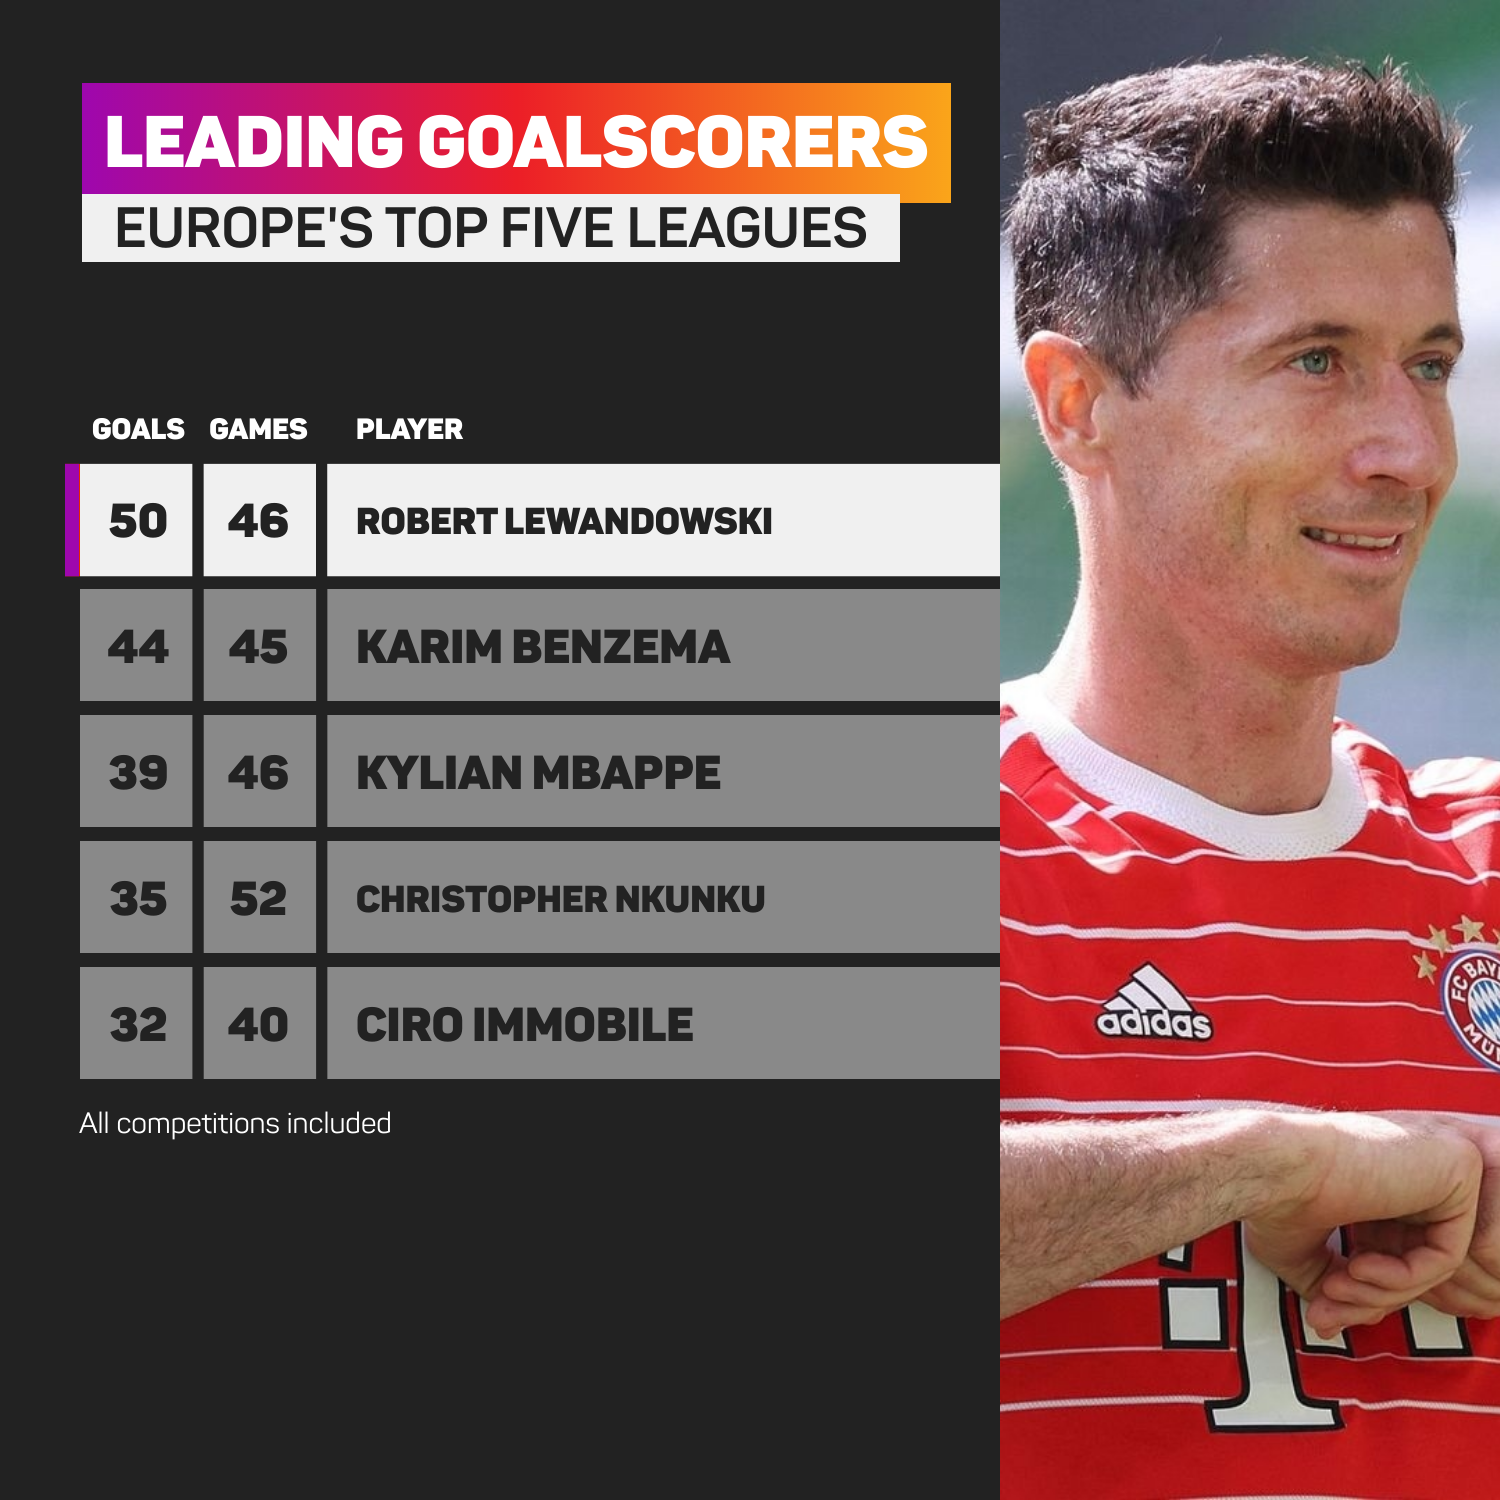 Robert Lewandowski scored 50 goals in all competitions this season